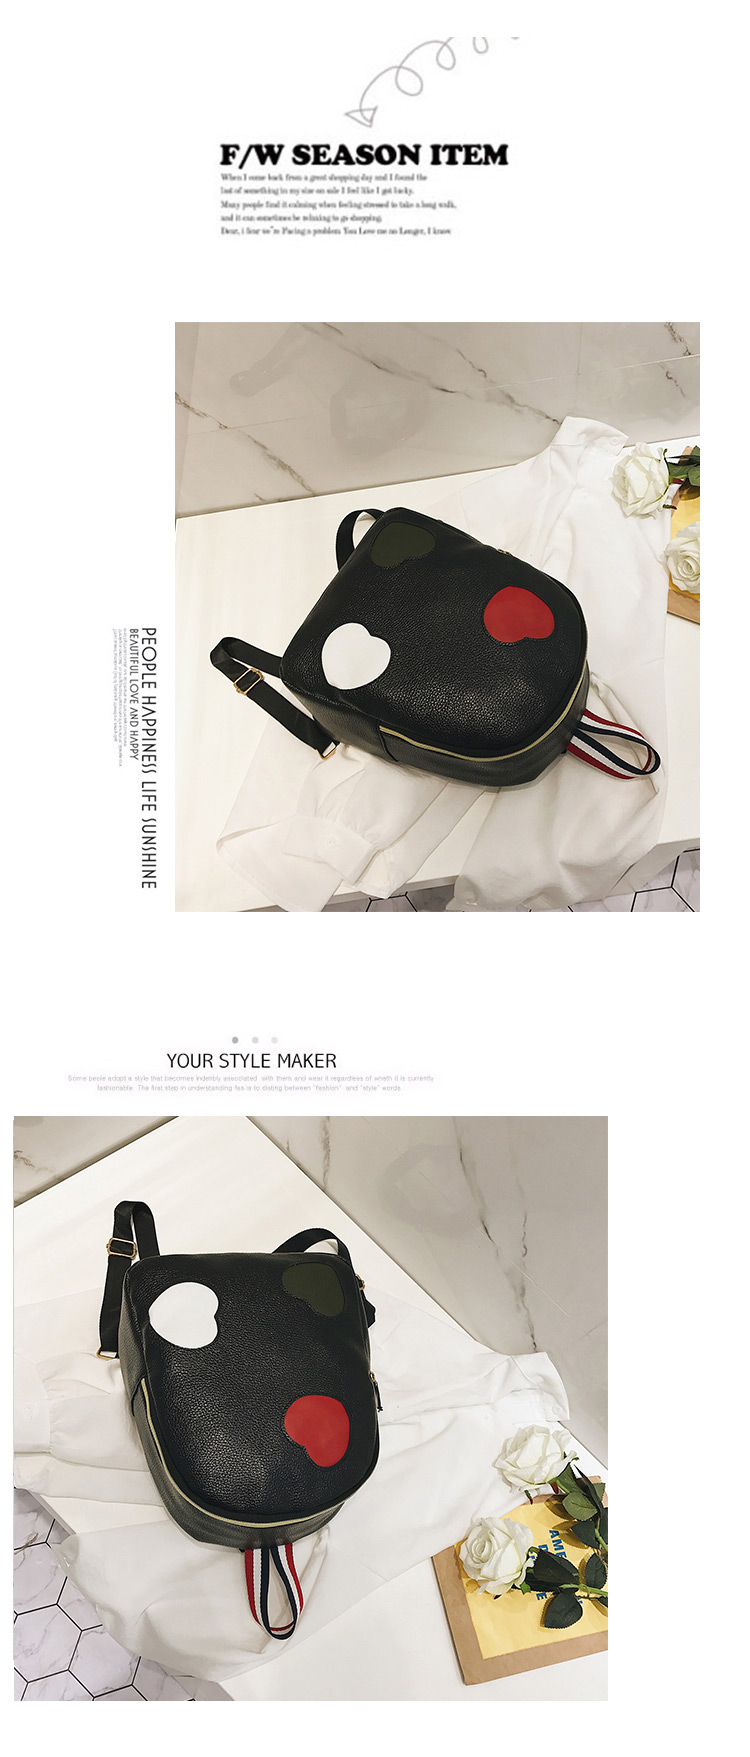 Lovely Black Heart Shape Decorated Backpack,Backpack